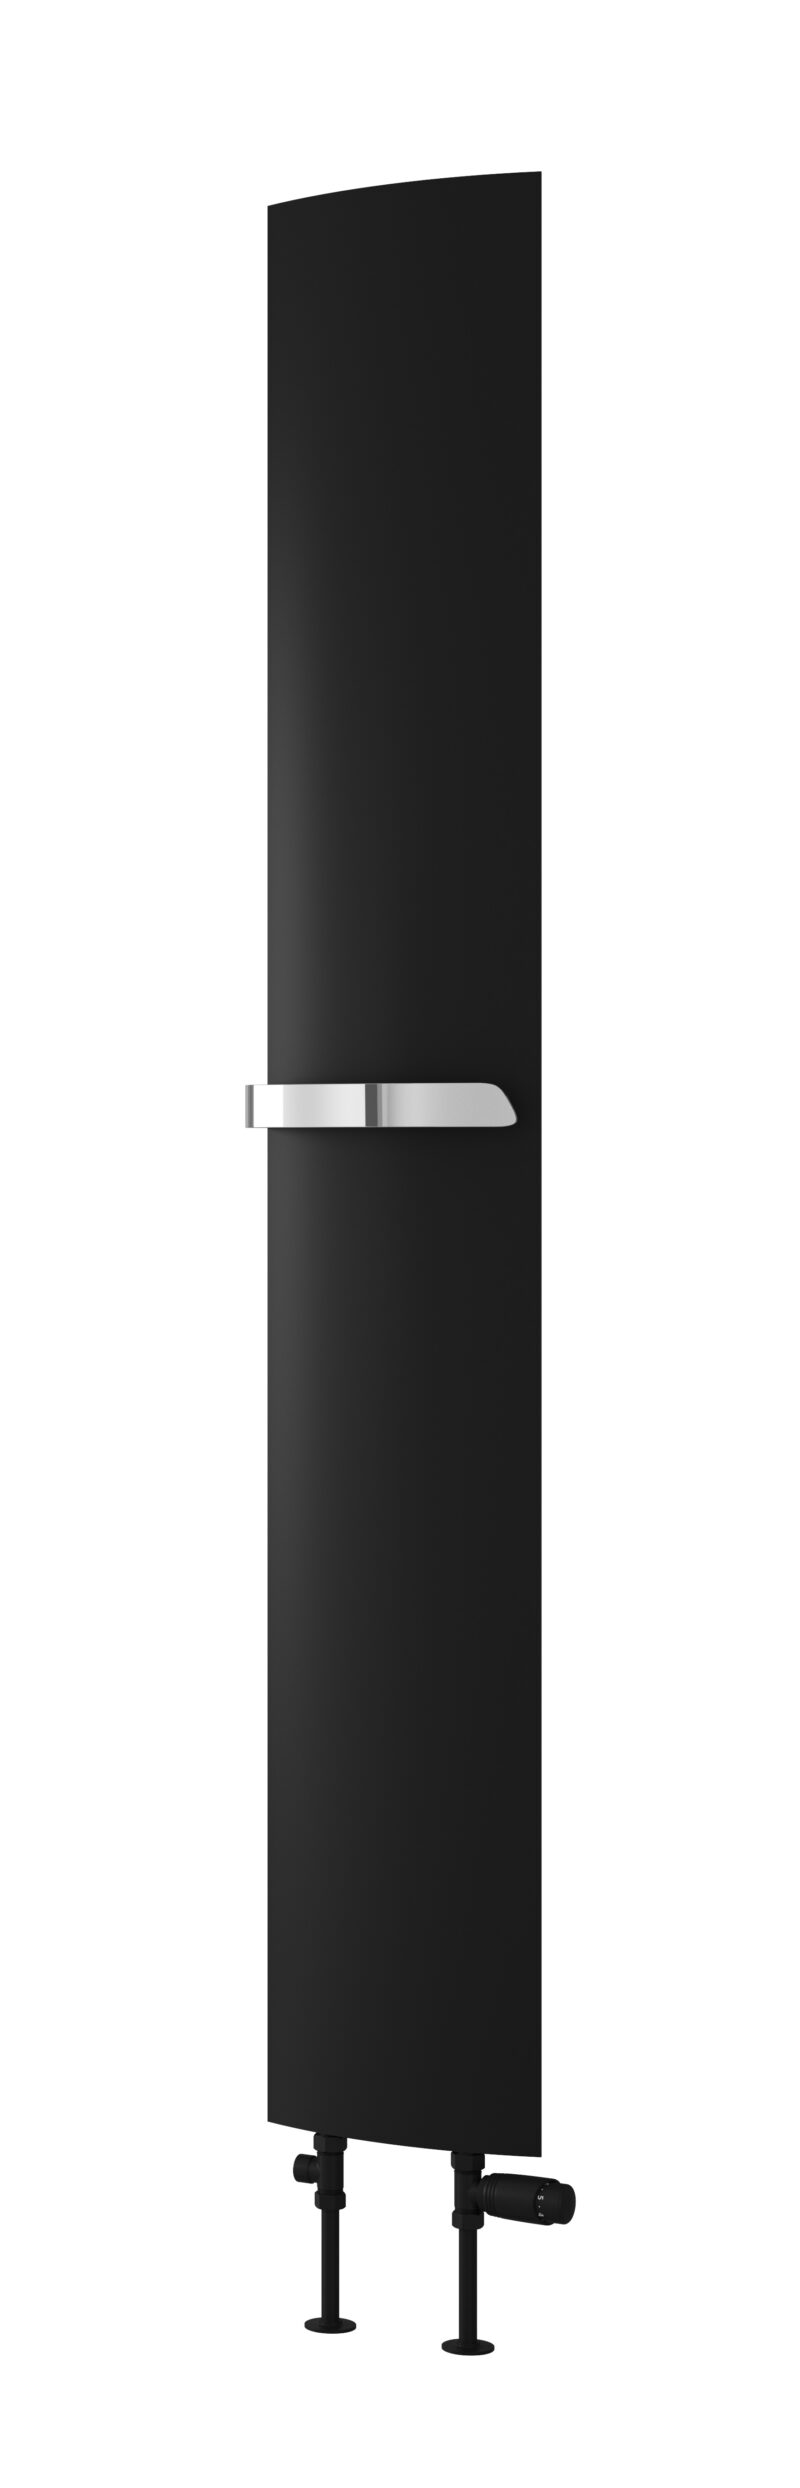 Modern vertical black picoli DRS radiators